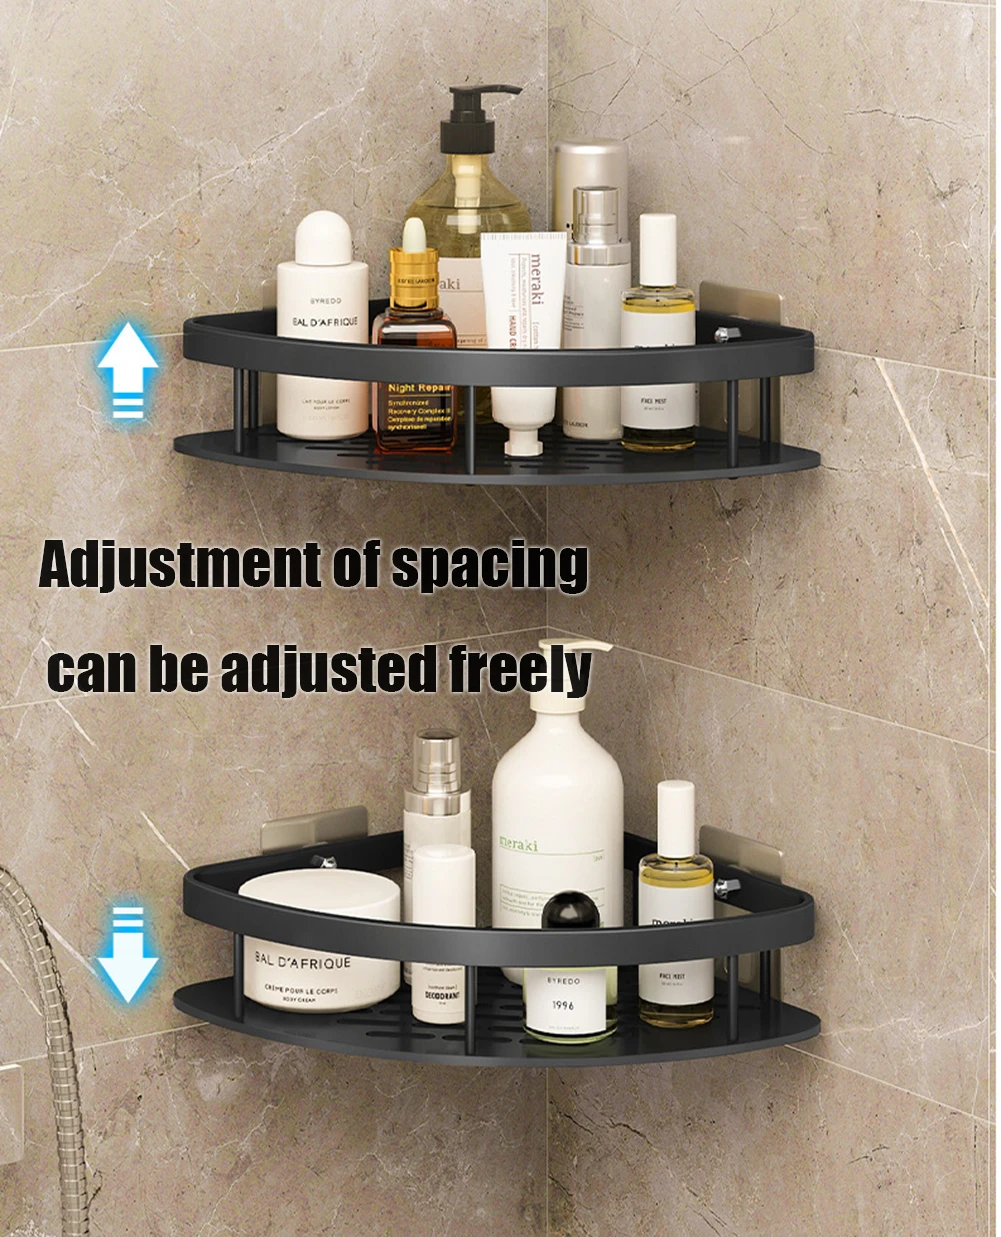 2 Pack Corner Shower Caddy,strong Adhesive Shower Organizer Shelf  .waterproof, Rustproof Wall-mounted Shower Shelves